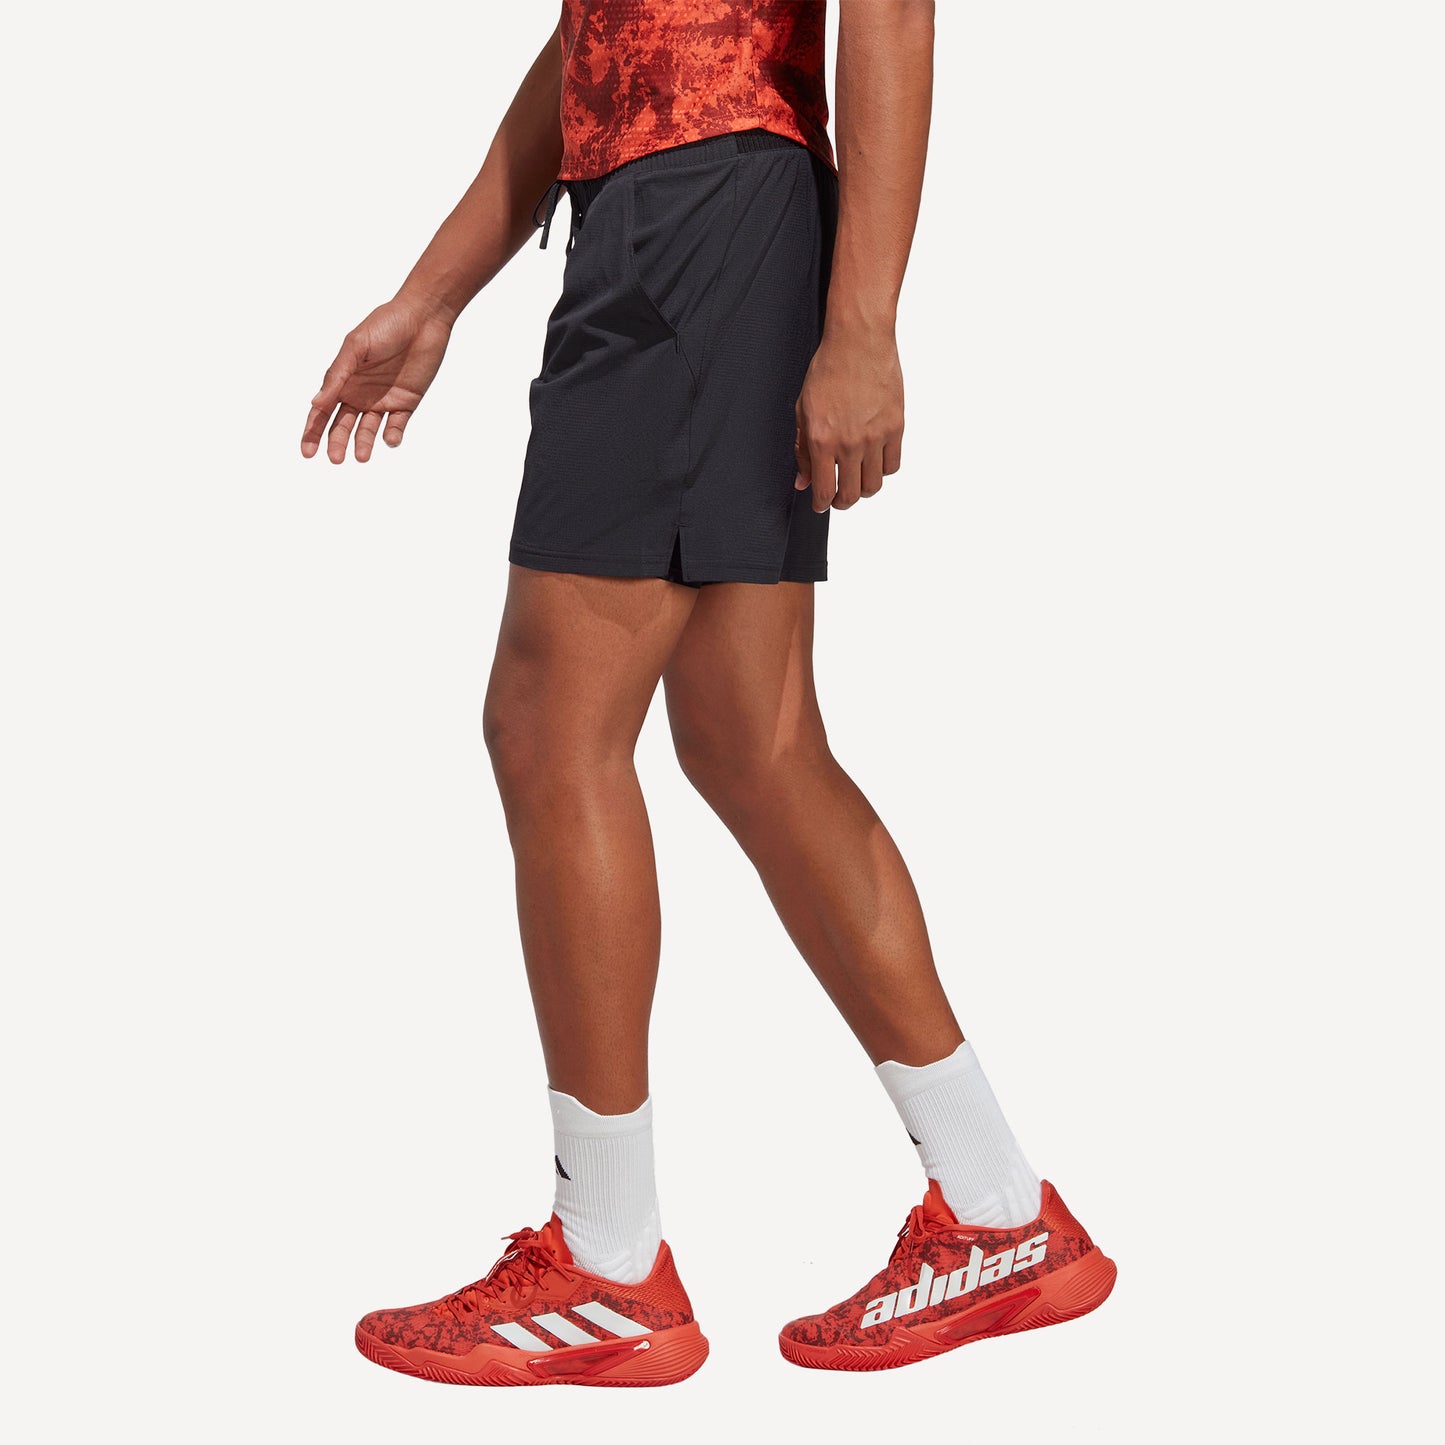 adidas Ergo Men's 7-Inch Tennis Shorts Black (3)